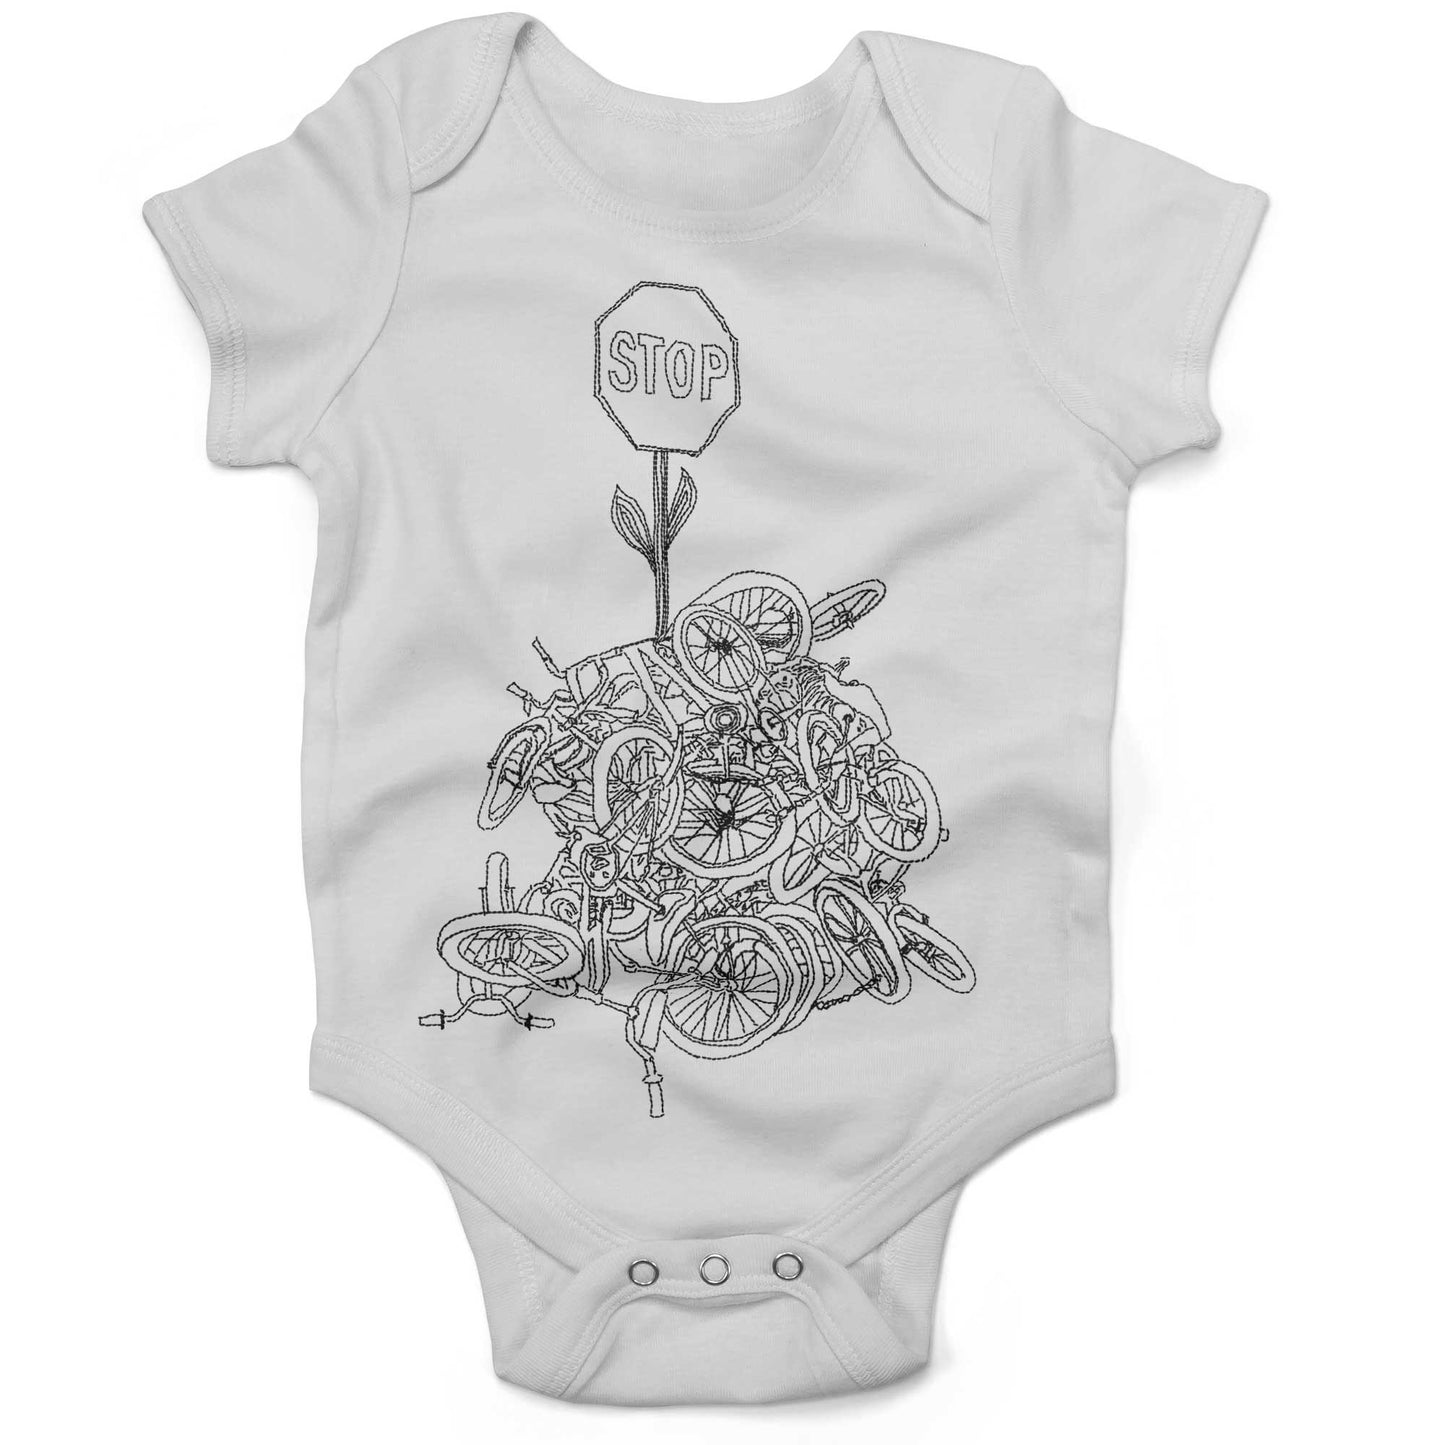 Zoobomber Bike Pyle Infant Bodysuit or Raglan Baby Tee-White-3-6 months